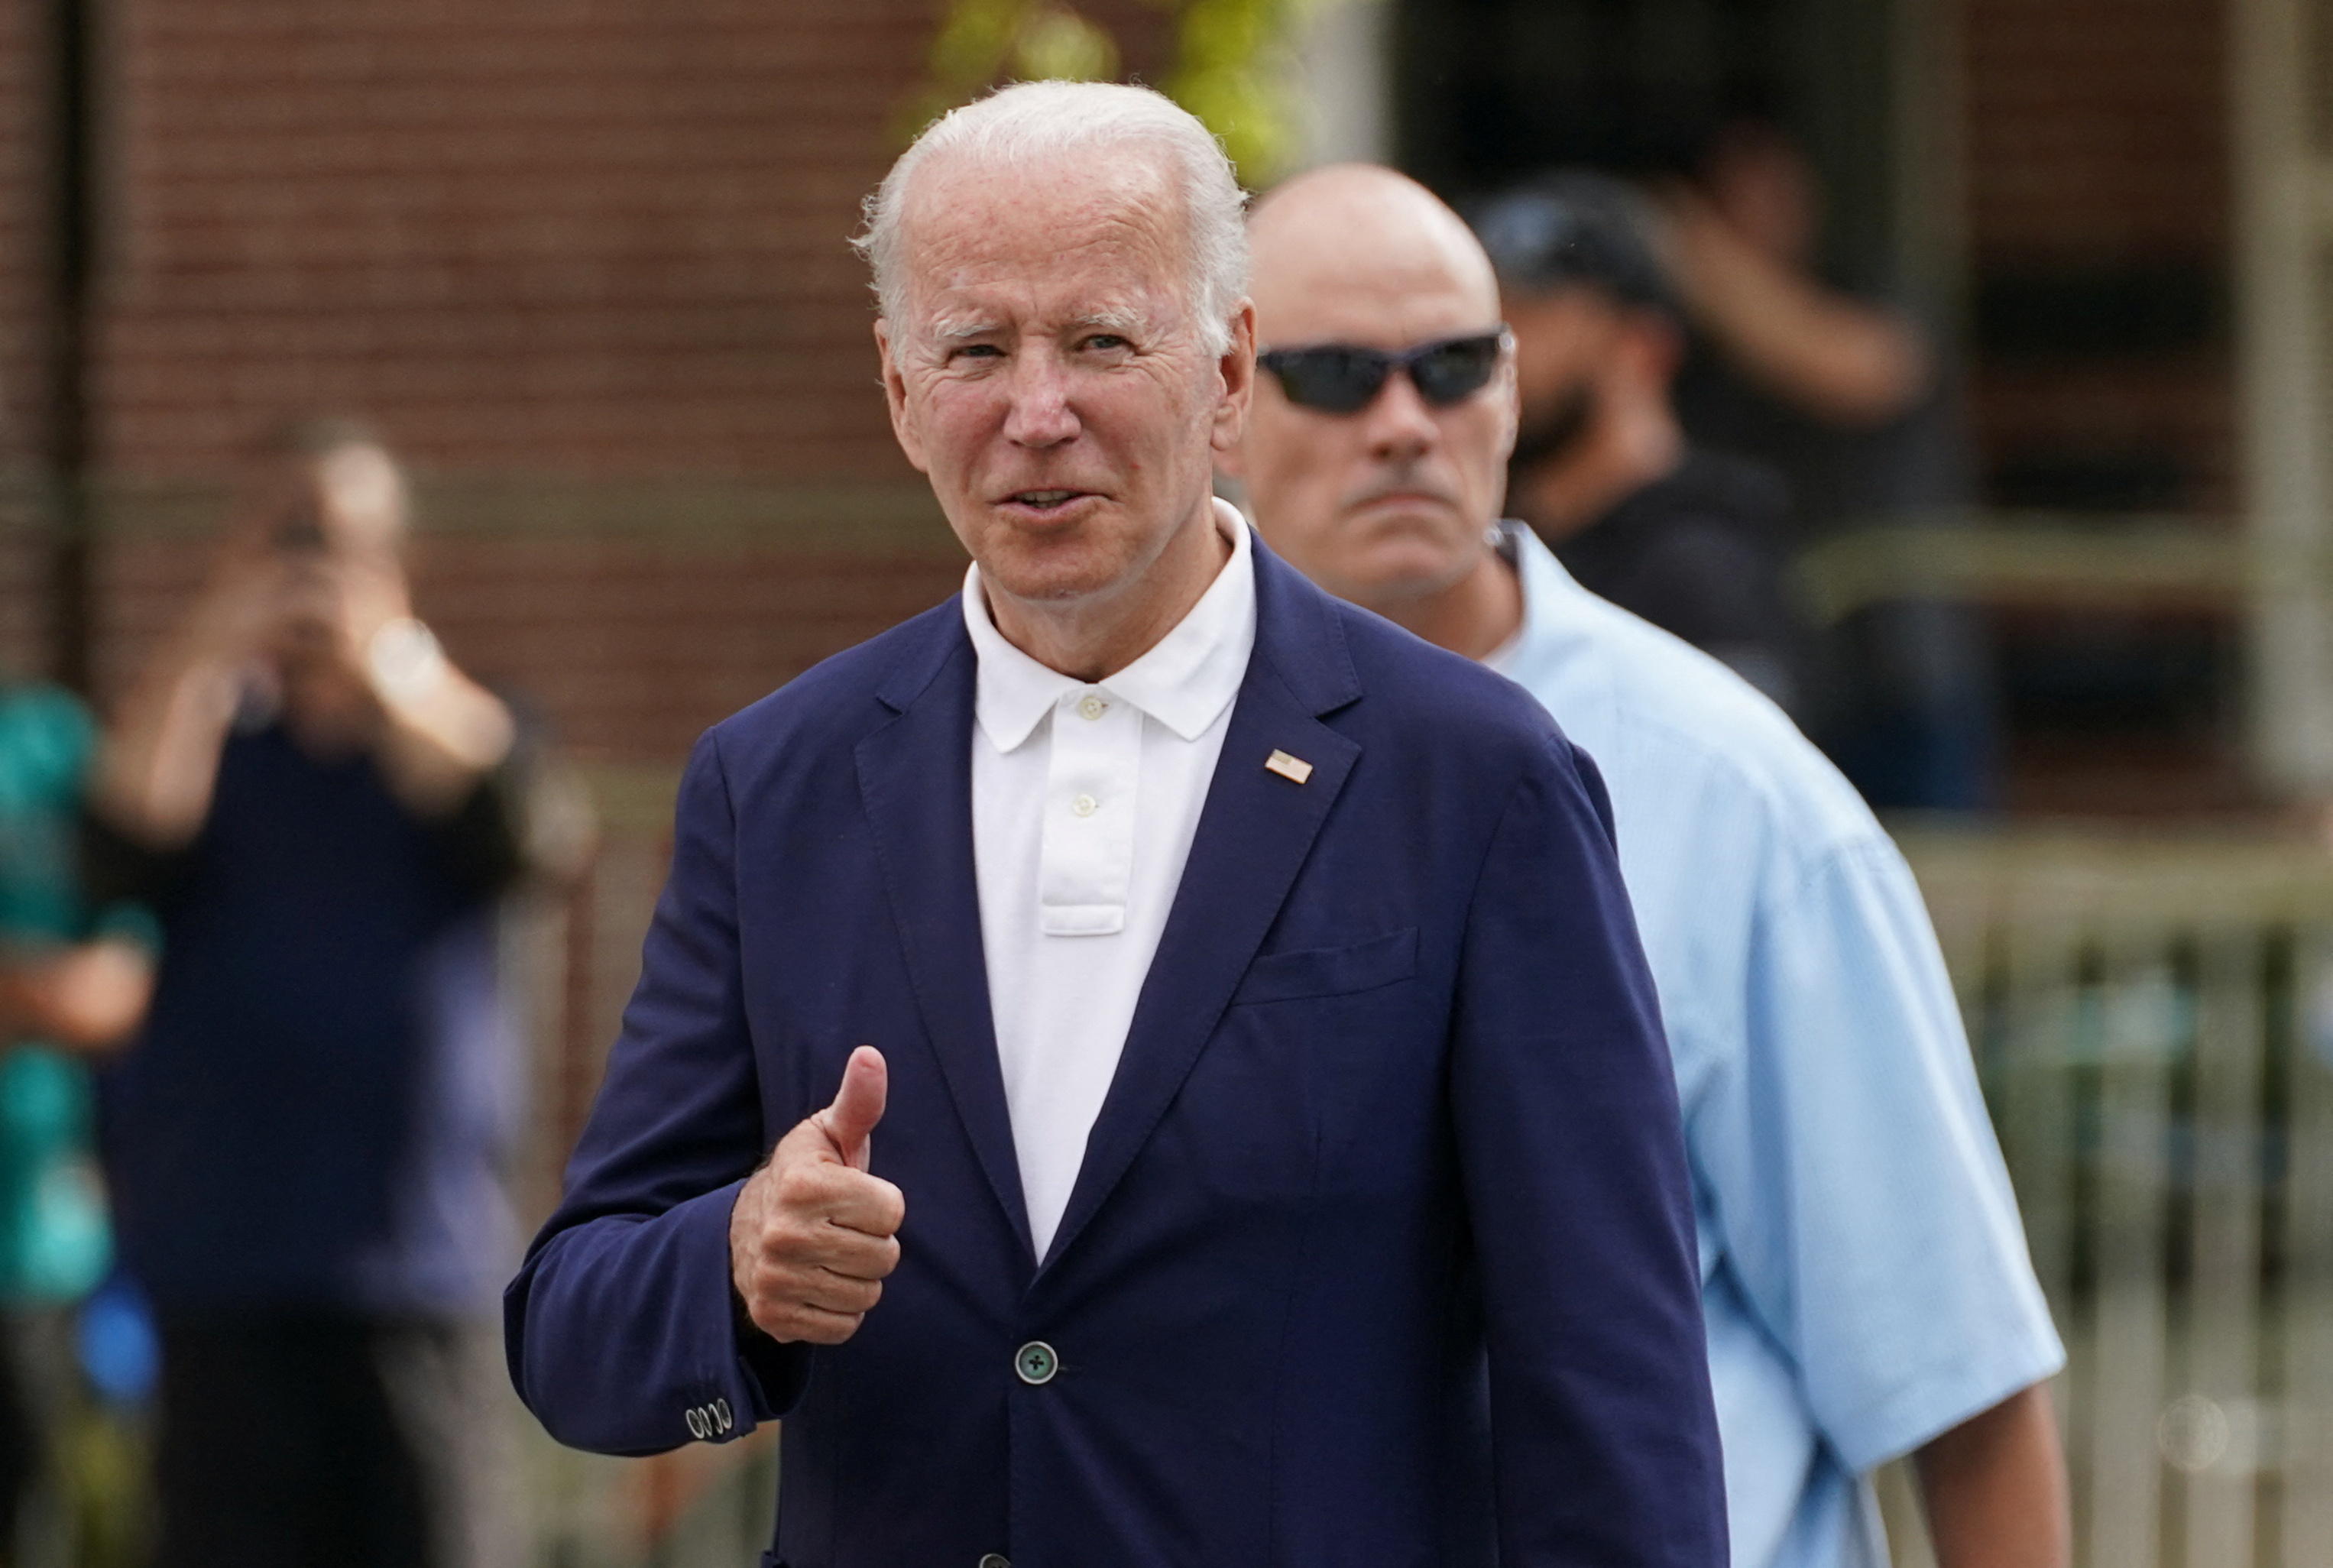 Biden attends church in Wilmington, Delaware